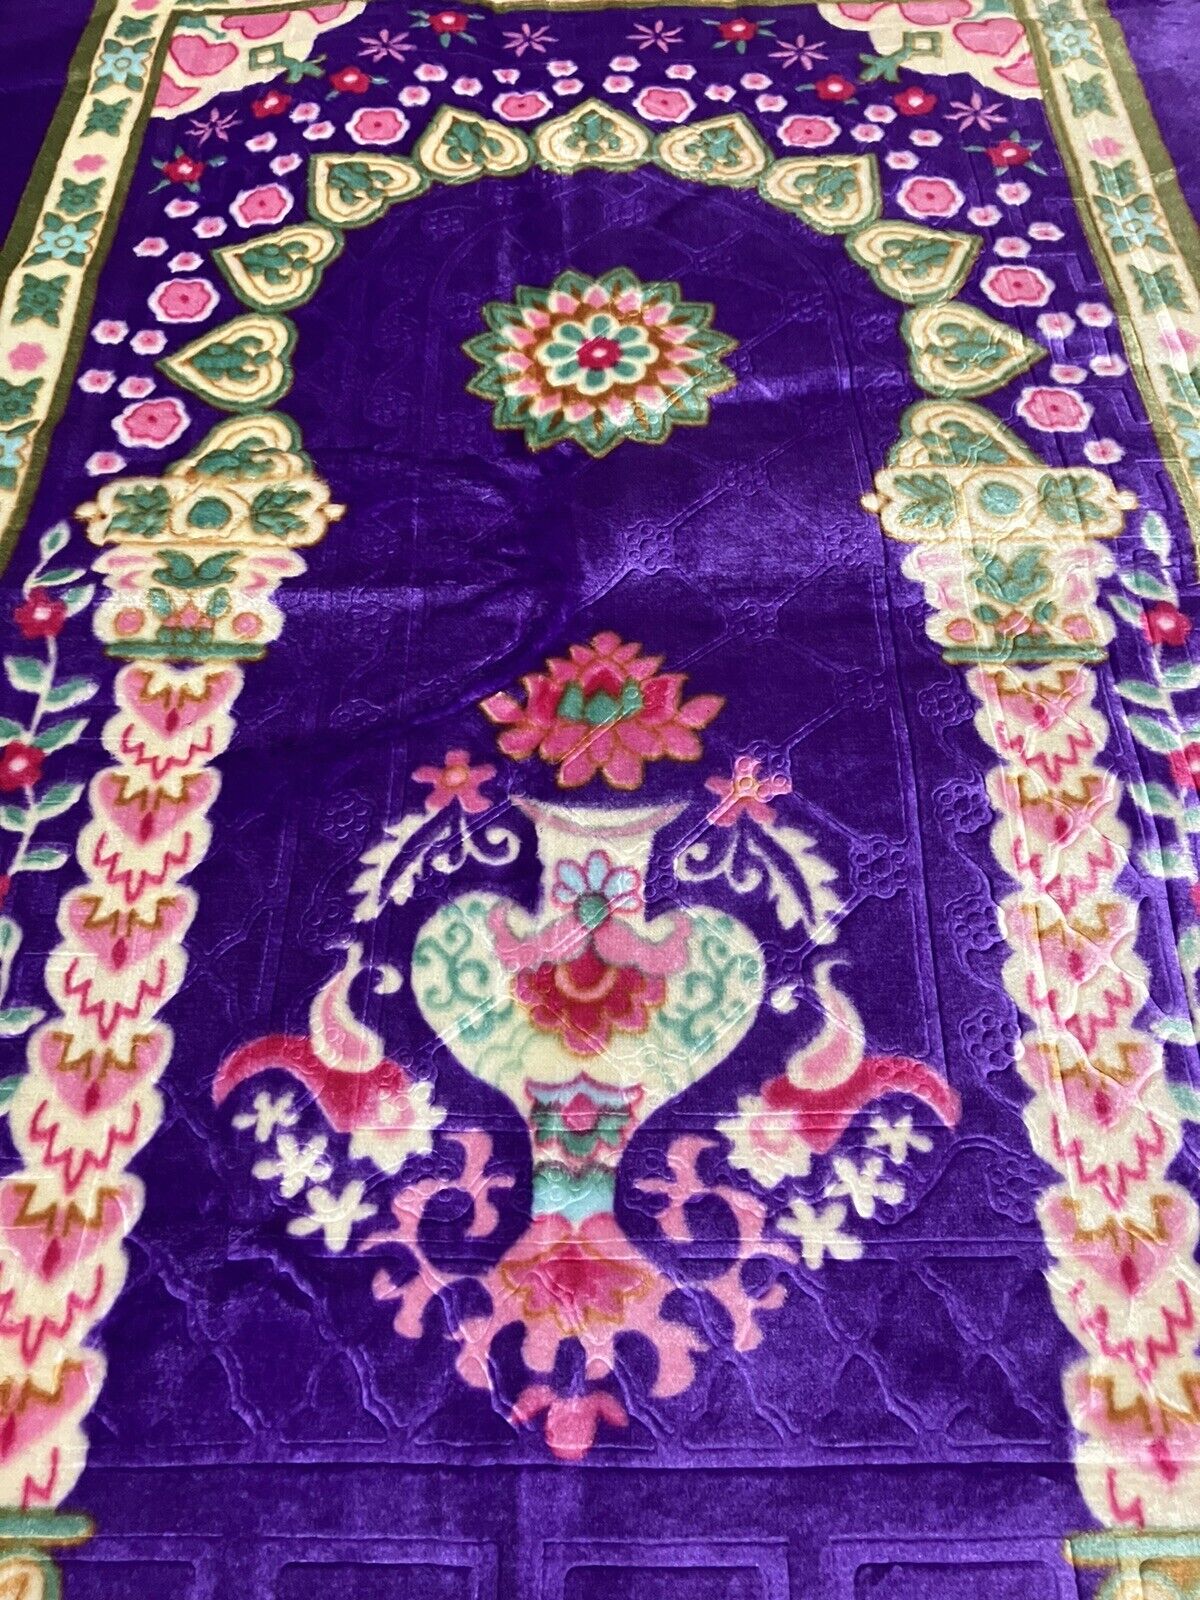 very soft Muslim Prayer Rug 70x110CM Thick And Padded Purple